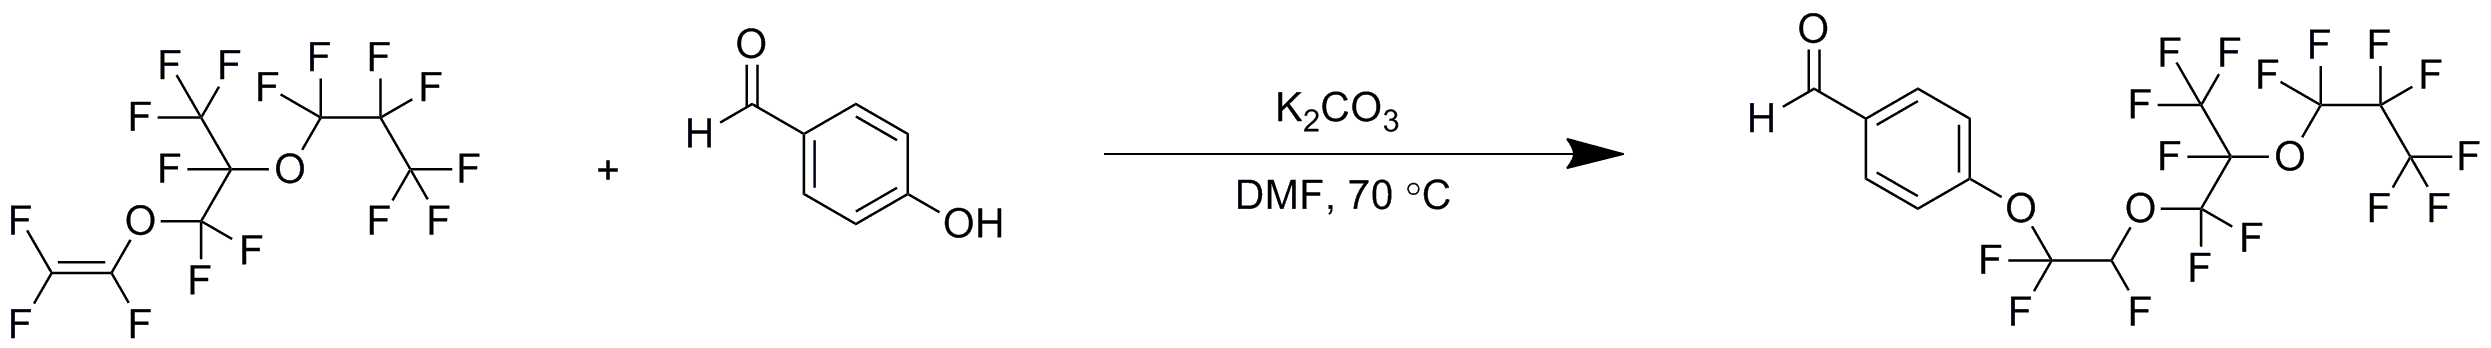 4-RF’-benzaldehyde의 합성법